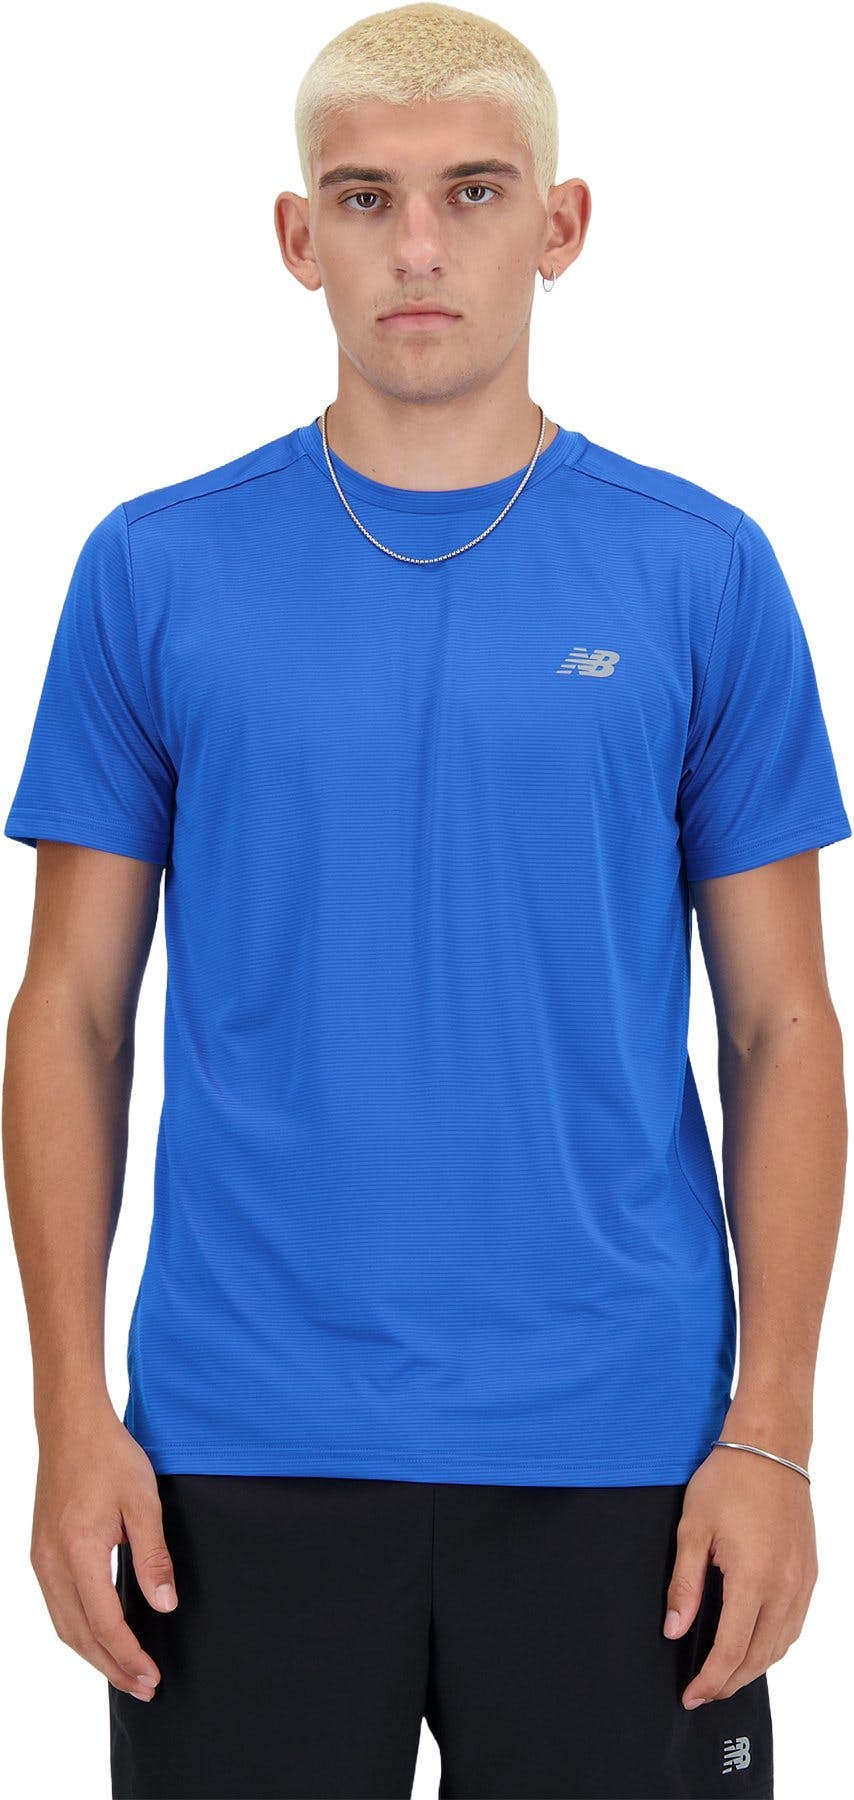 Product image for Sport Essentials T-Shirt - Men's